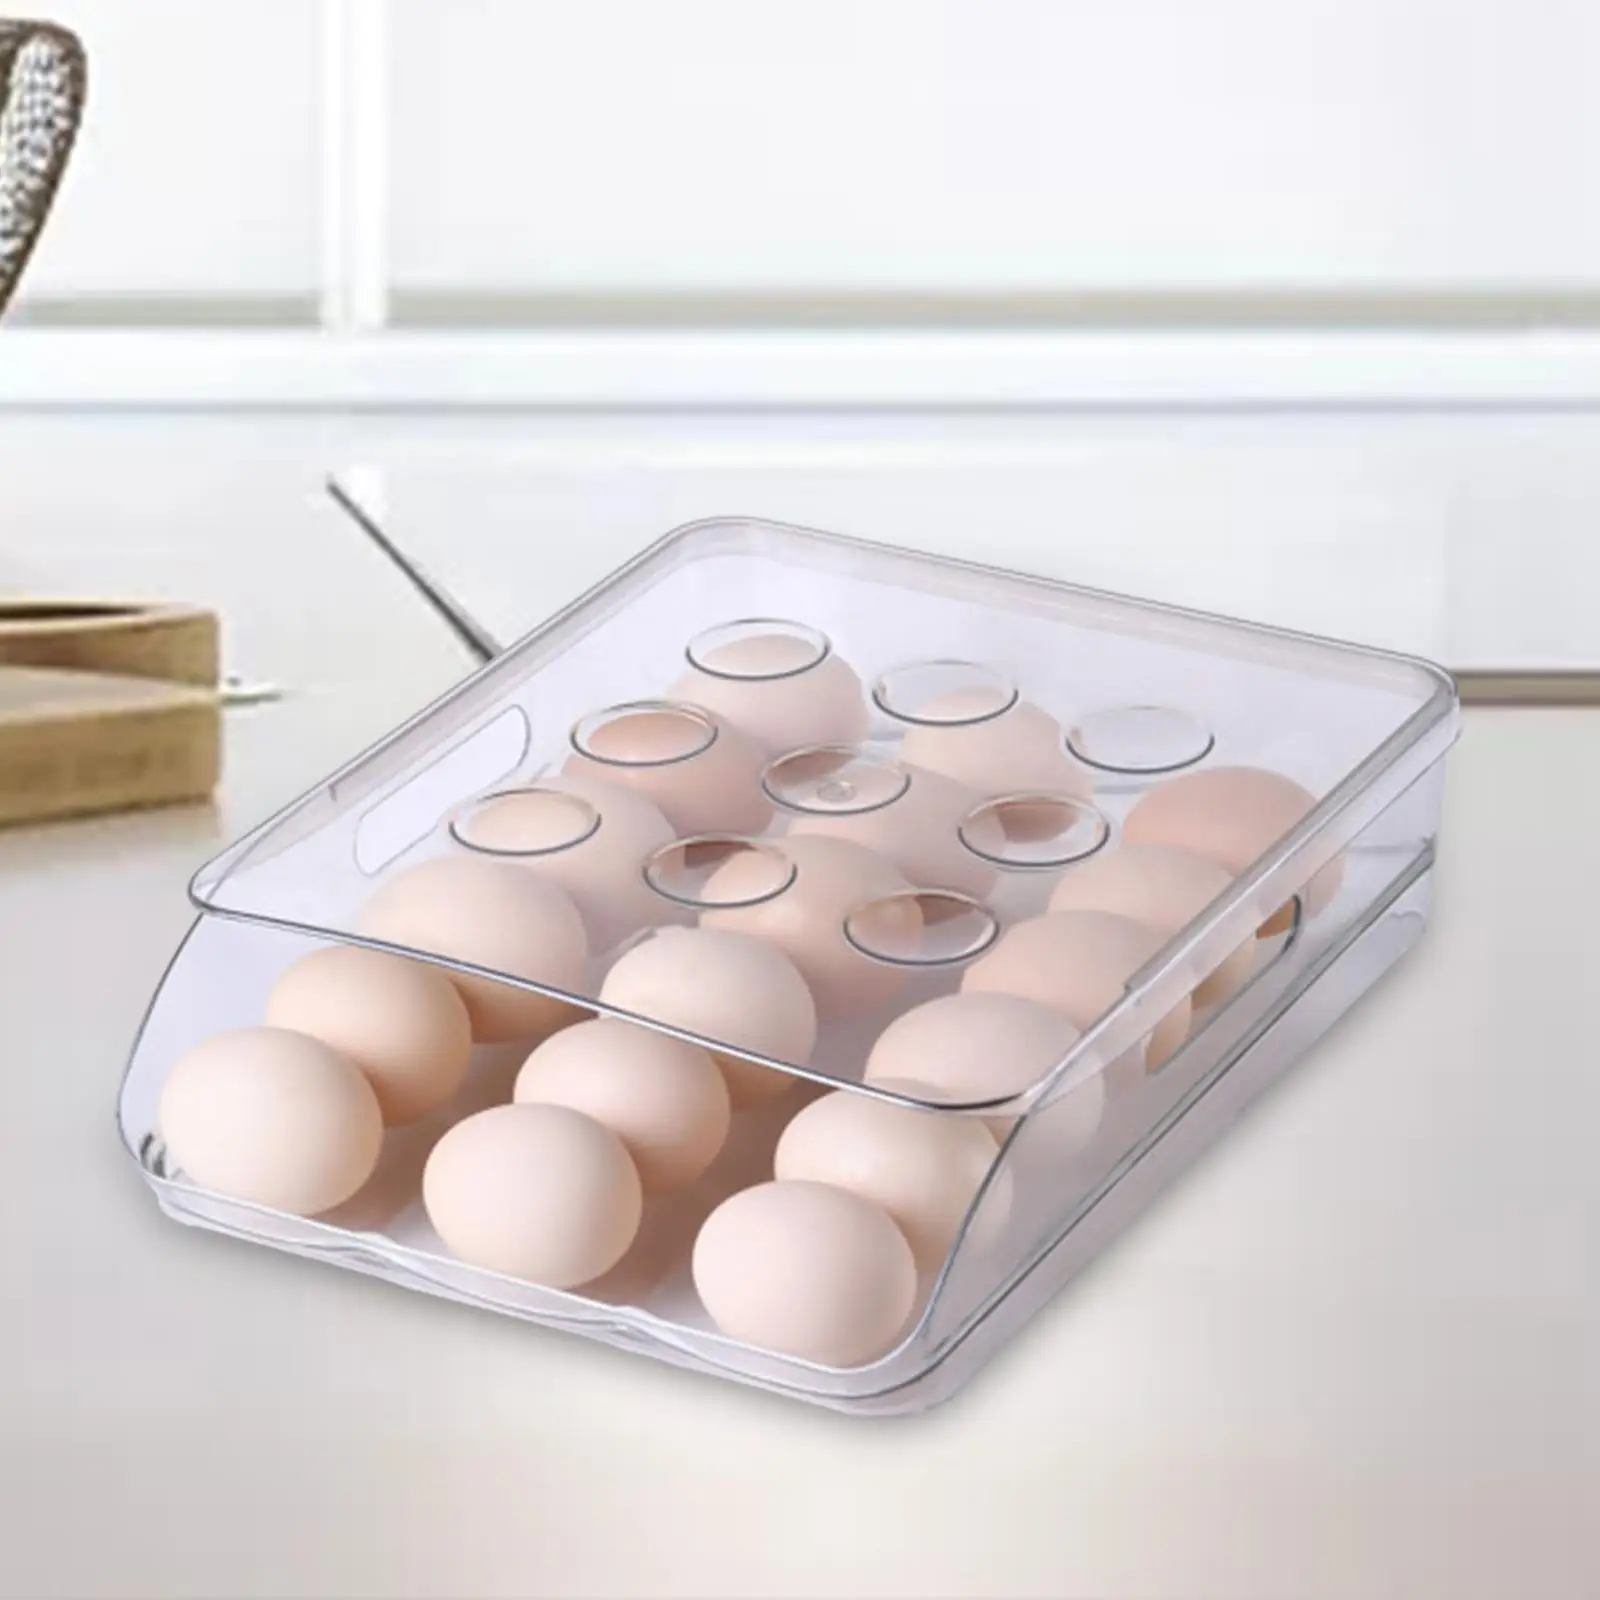 egg Storage Box with Lid Egg Container Fridge Organizer Slide Design Egg Holder Automatic Rolling for Household Kitchen